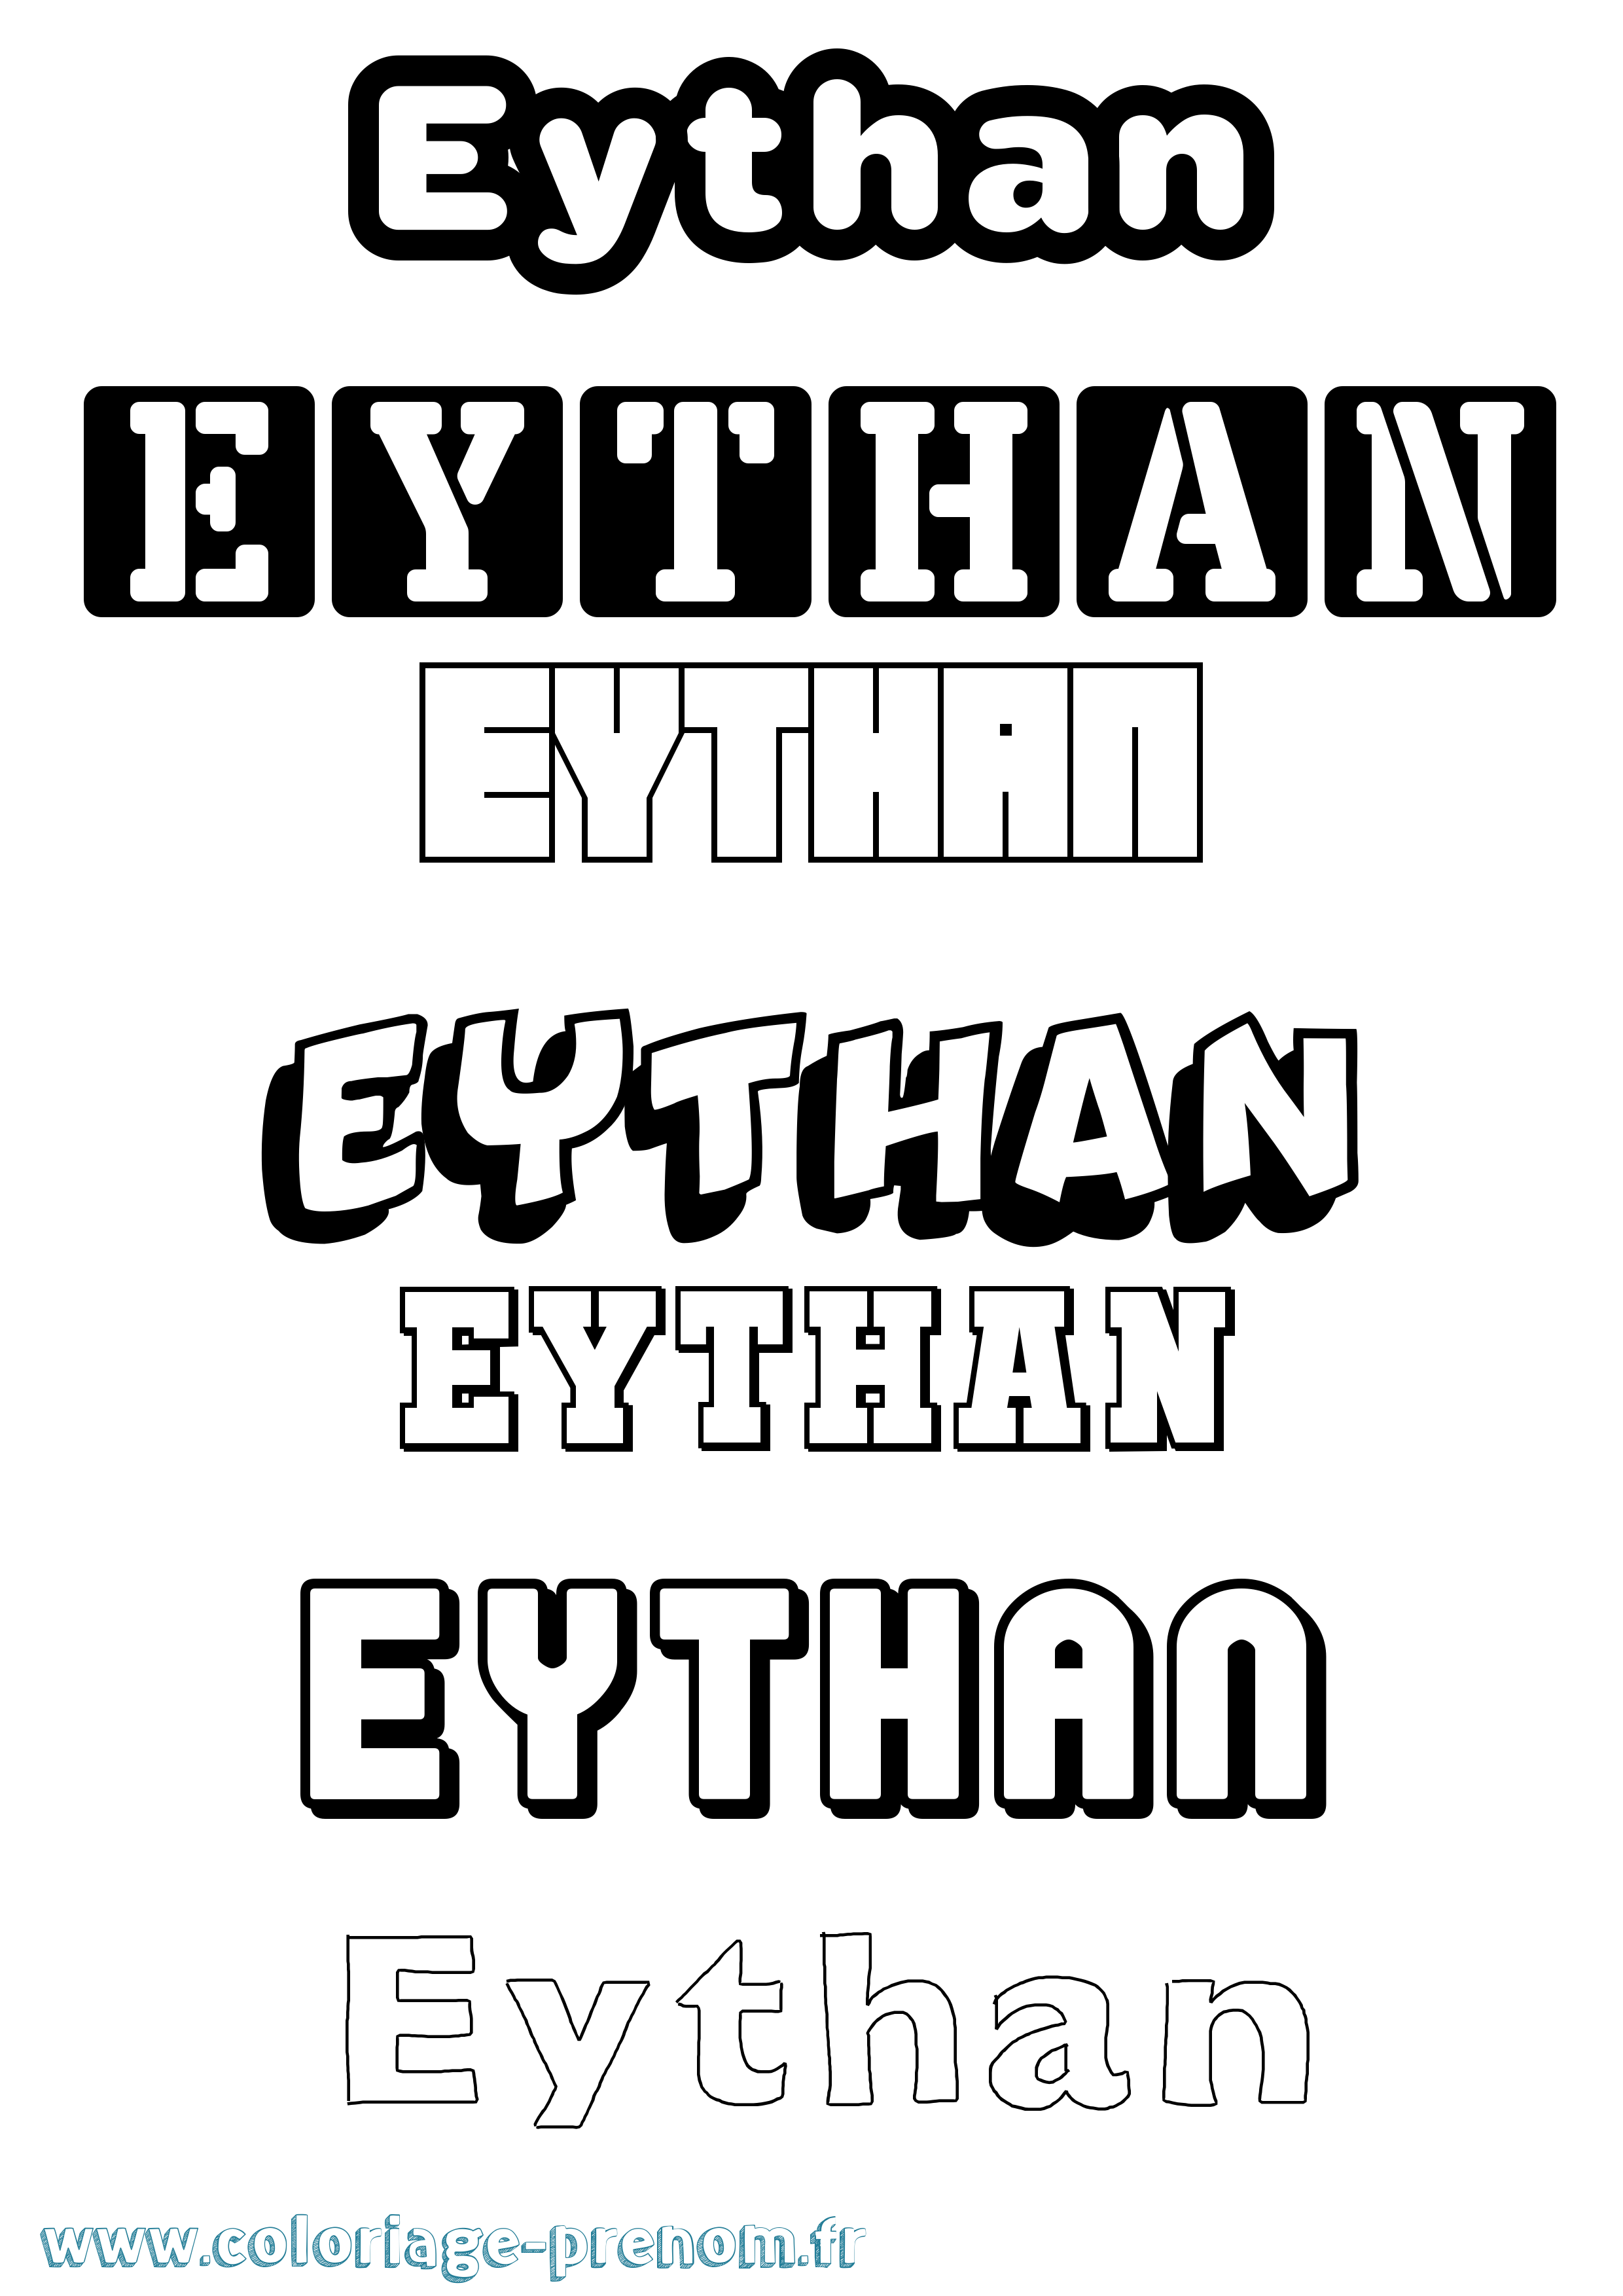 Coloriage prénom Eythan Simple